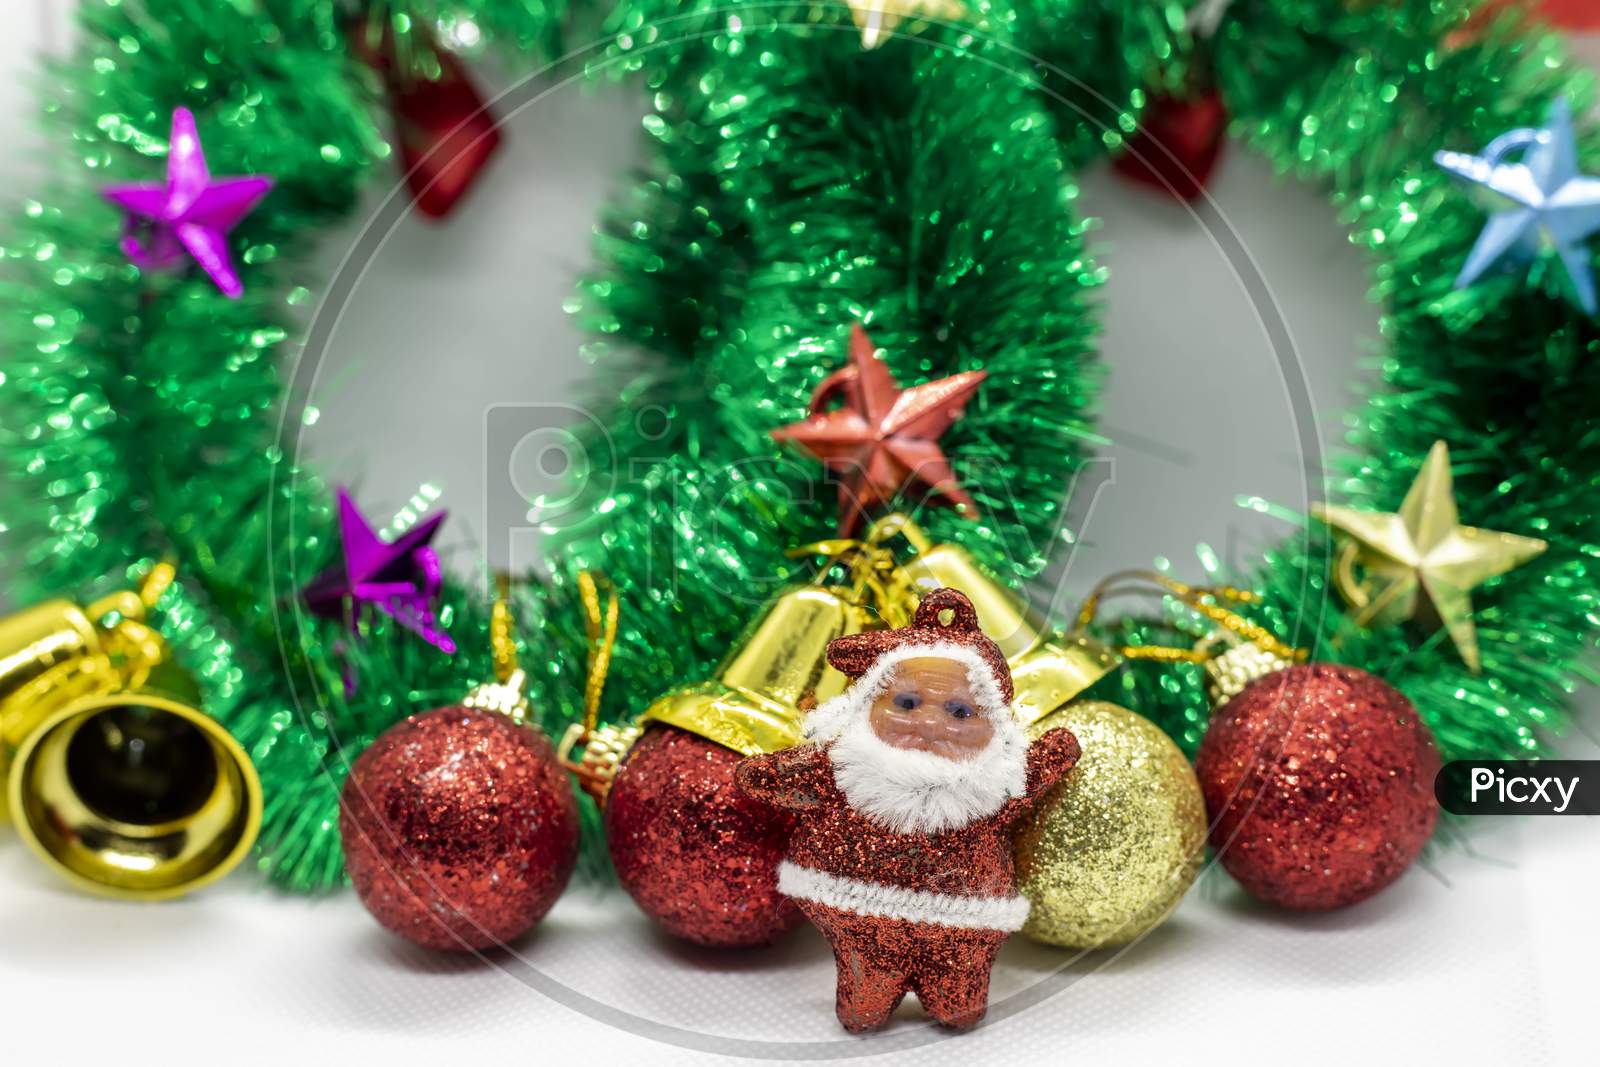 Close-Up Shot Of Santa Claus Wearing A Christmas Garland Adorned With Ornaments